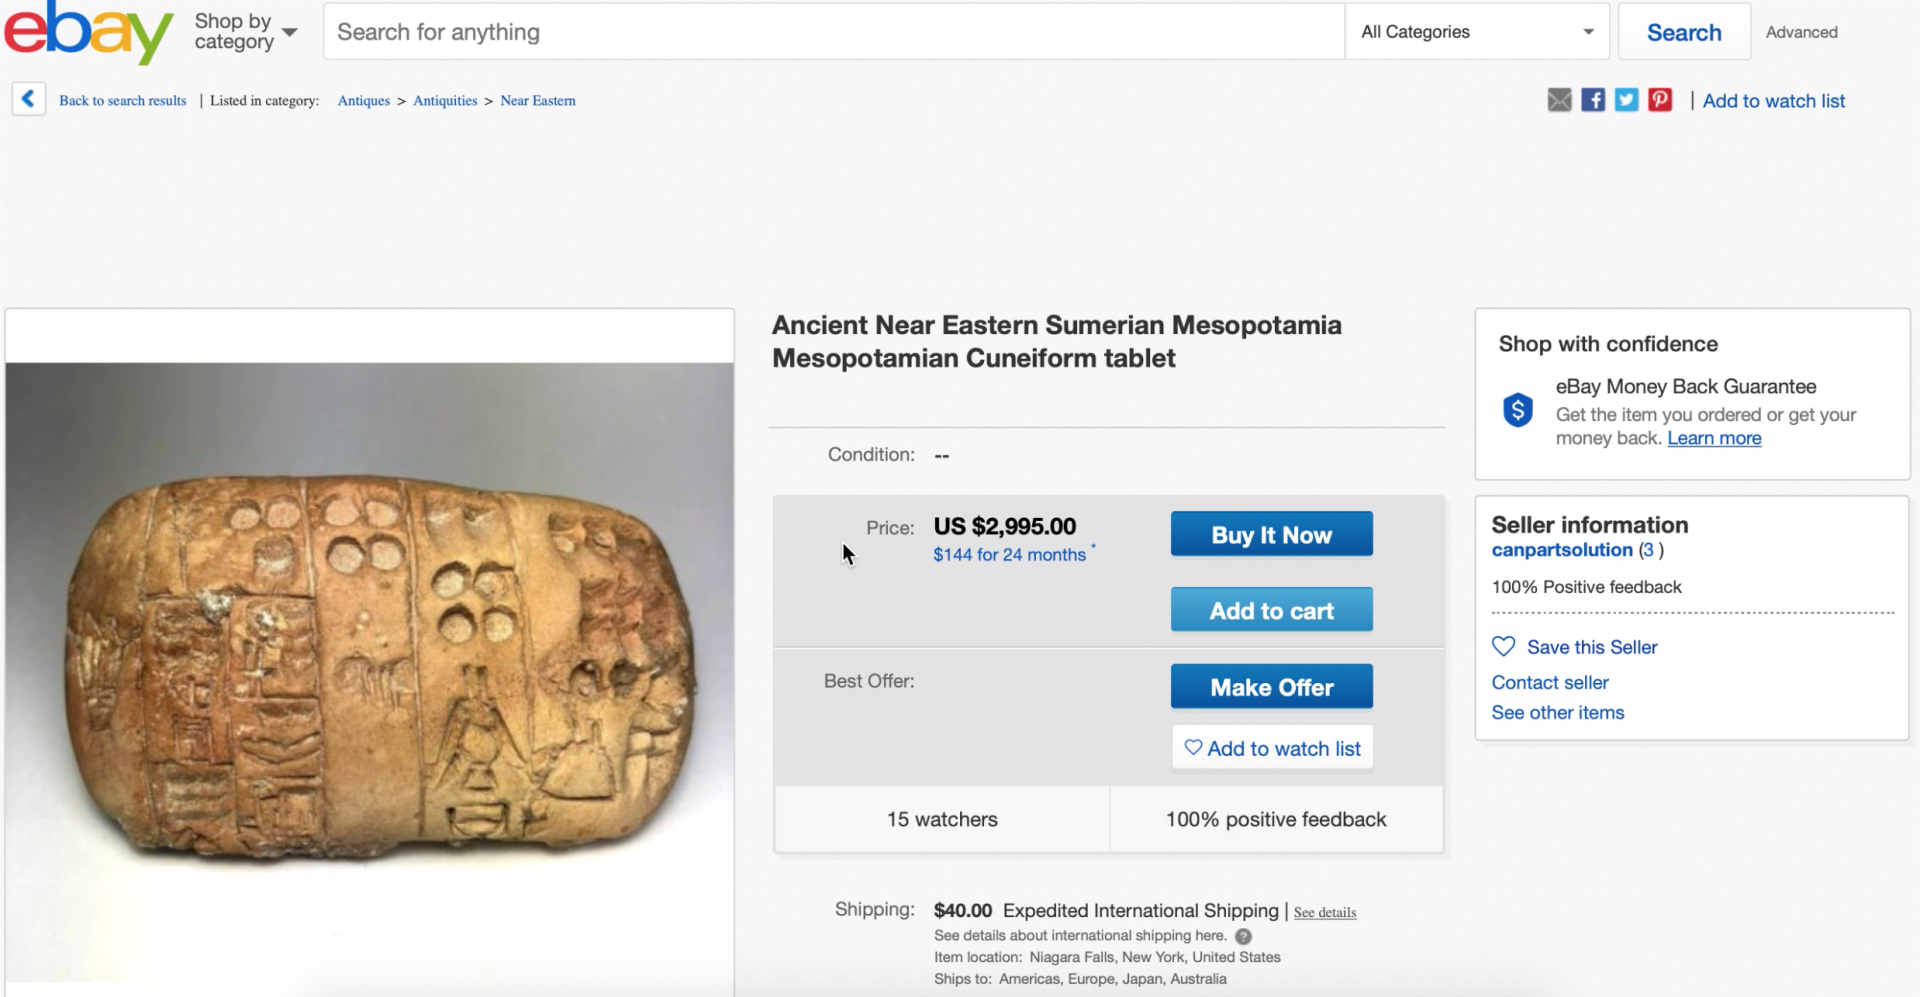 A Cuneiform Clay tablet for sale on eBay website of Mesopotamian civilization